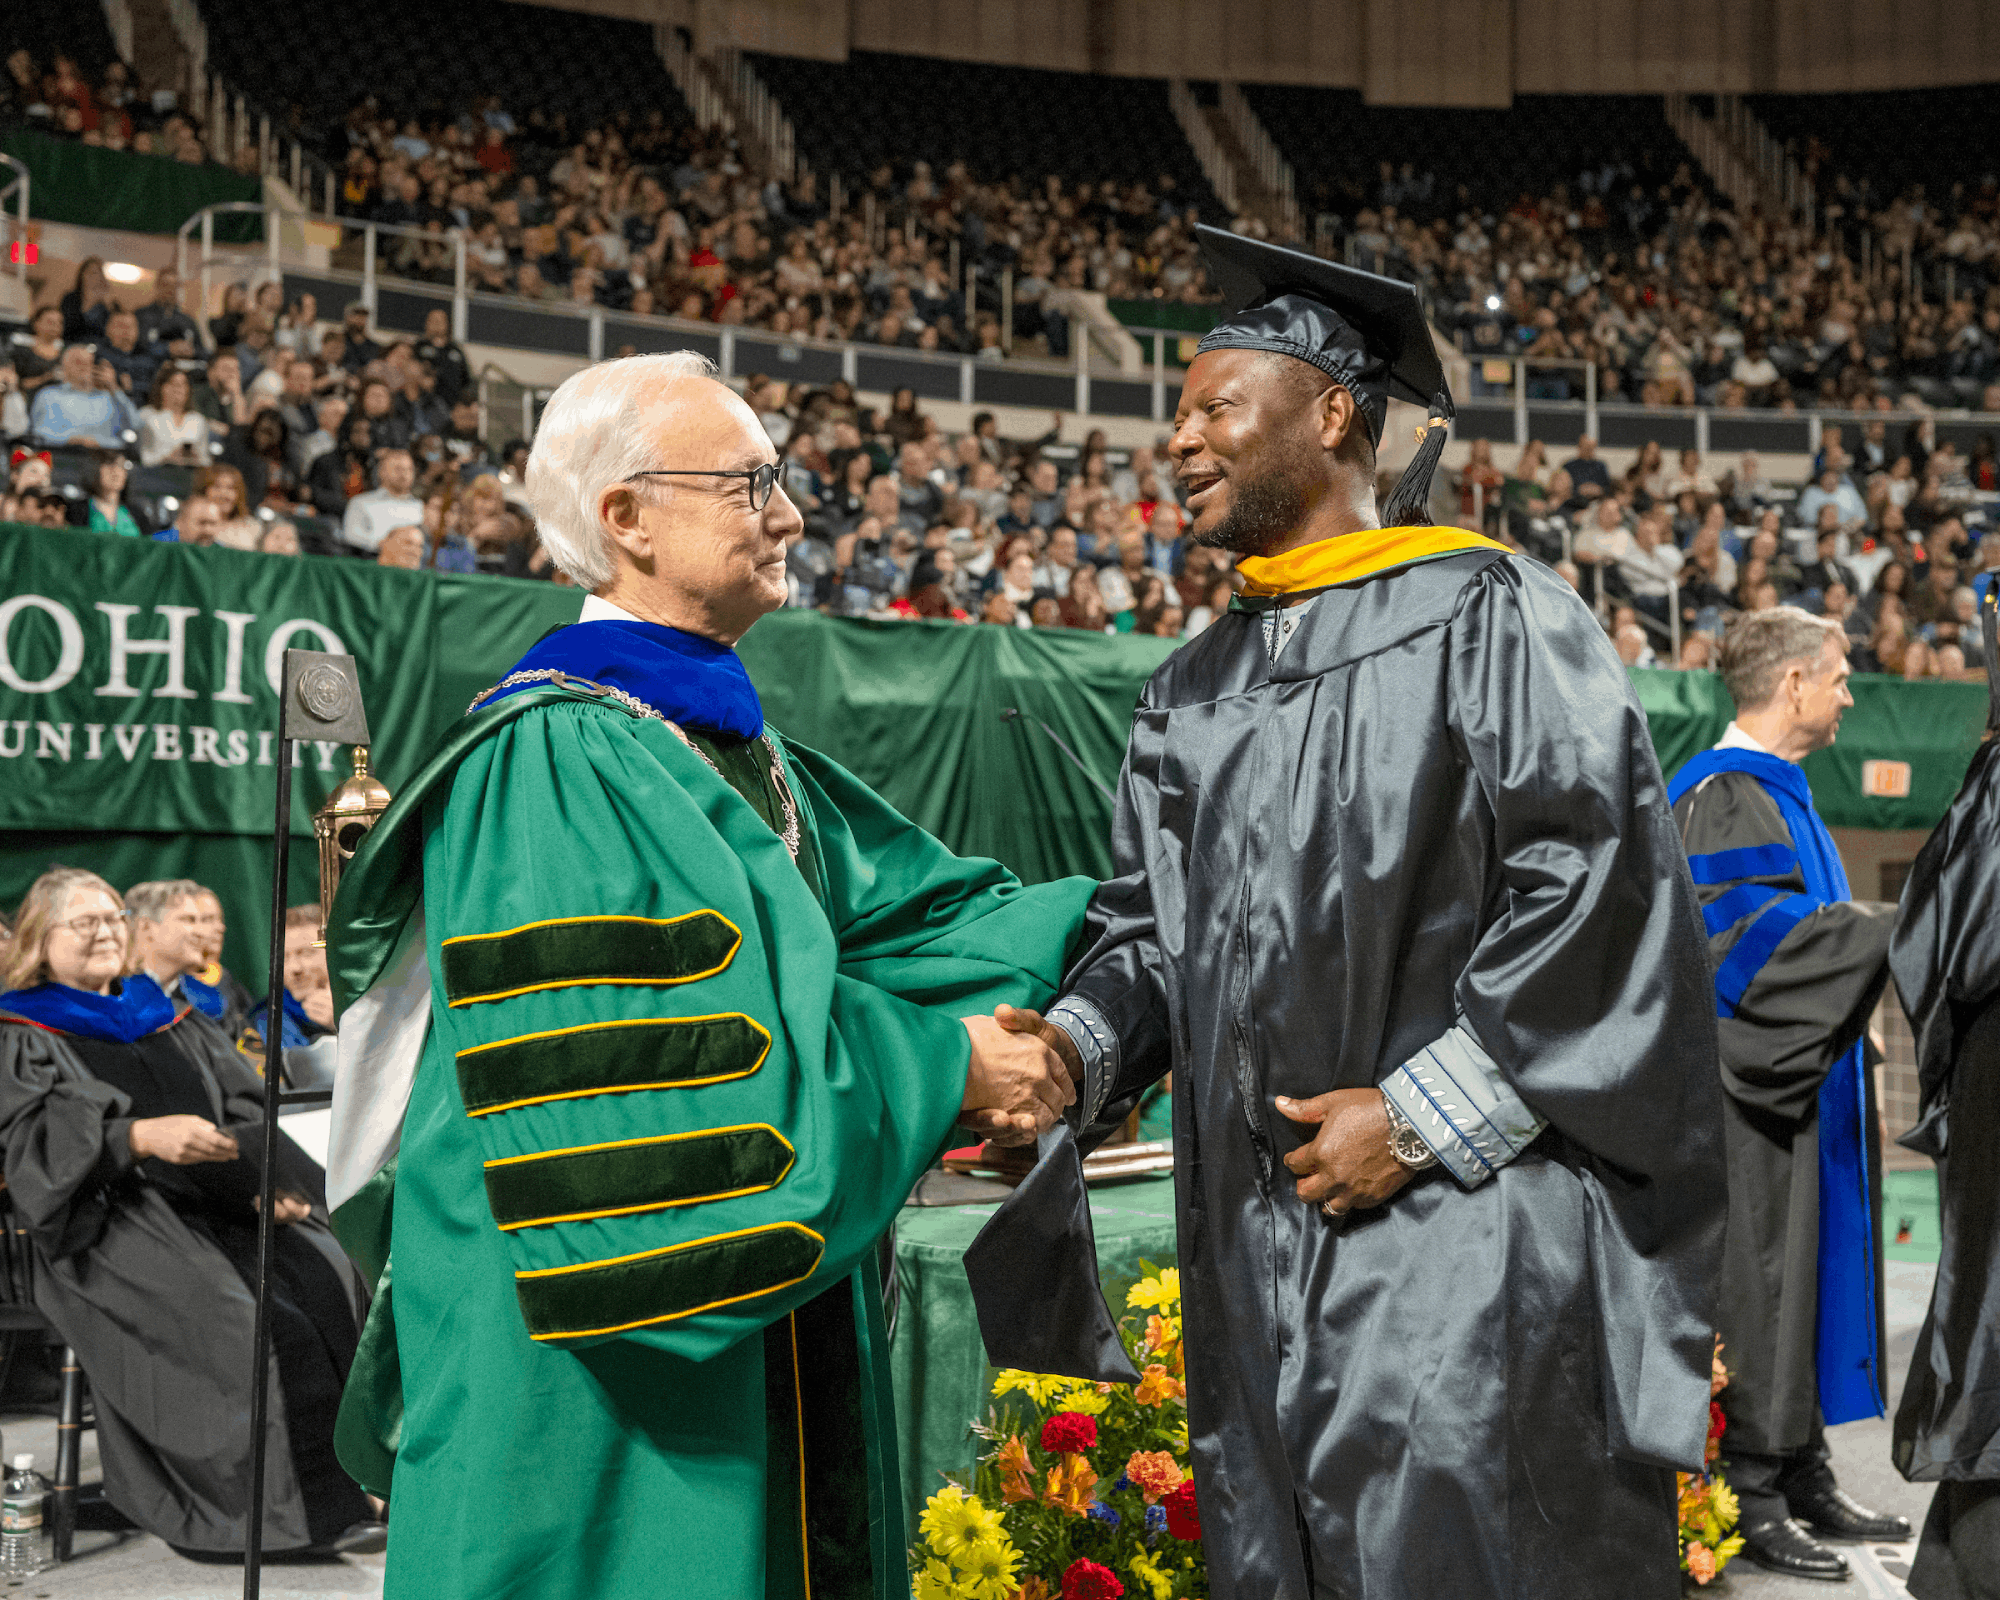 Ohio University President Hugh Sherman congratulates the Fall Commencement graduates.